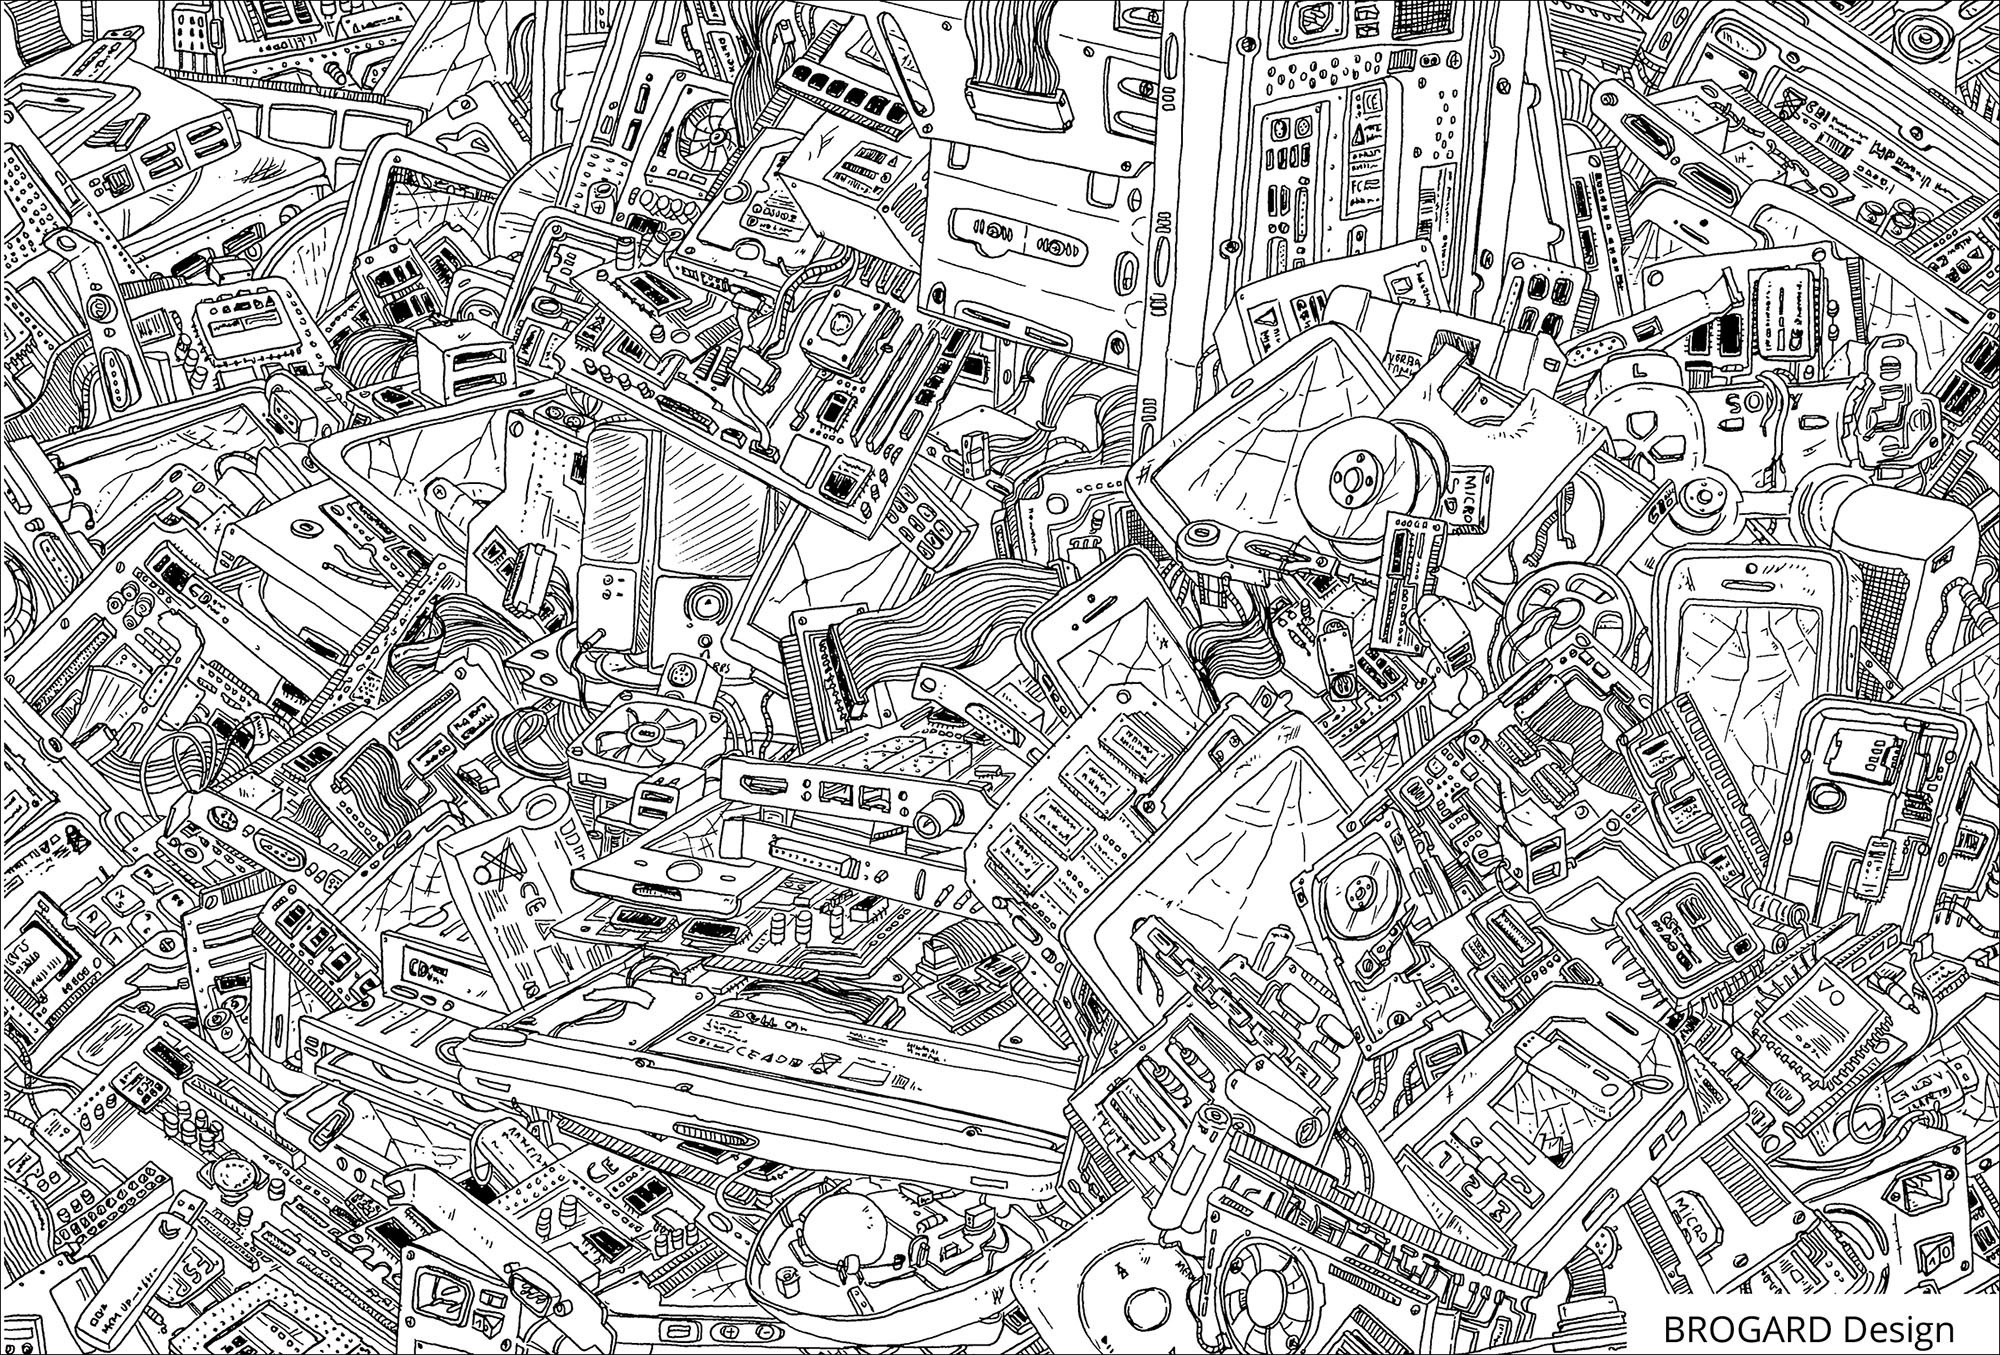 Un montón de detalles para colorear en este dibujo lleno de elementos electrónicos de ordenadores, Artista : Frédéric Brogard